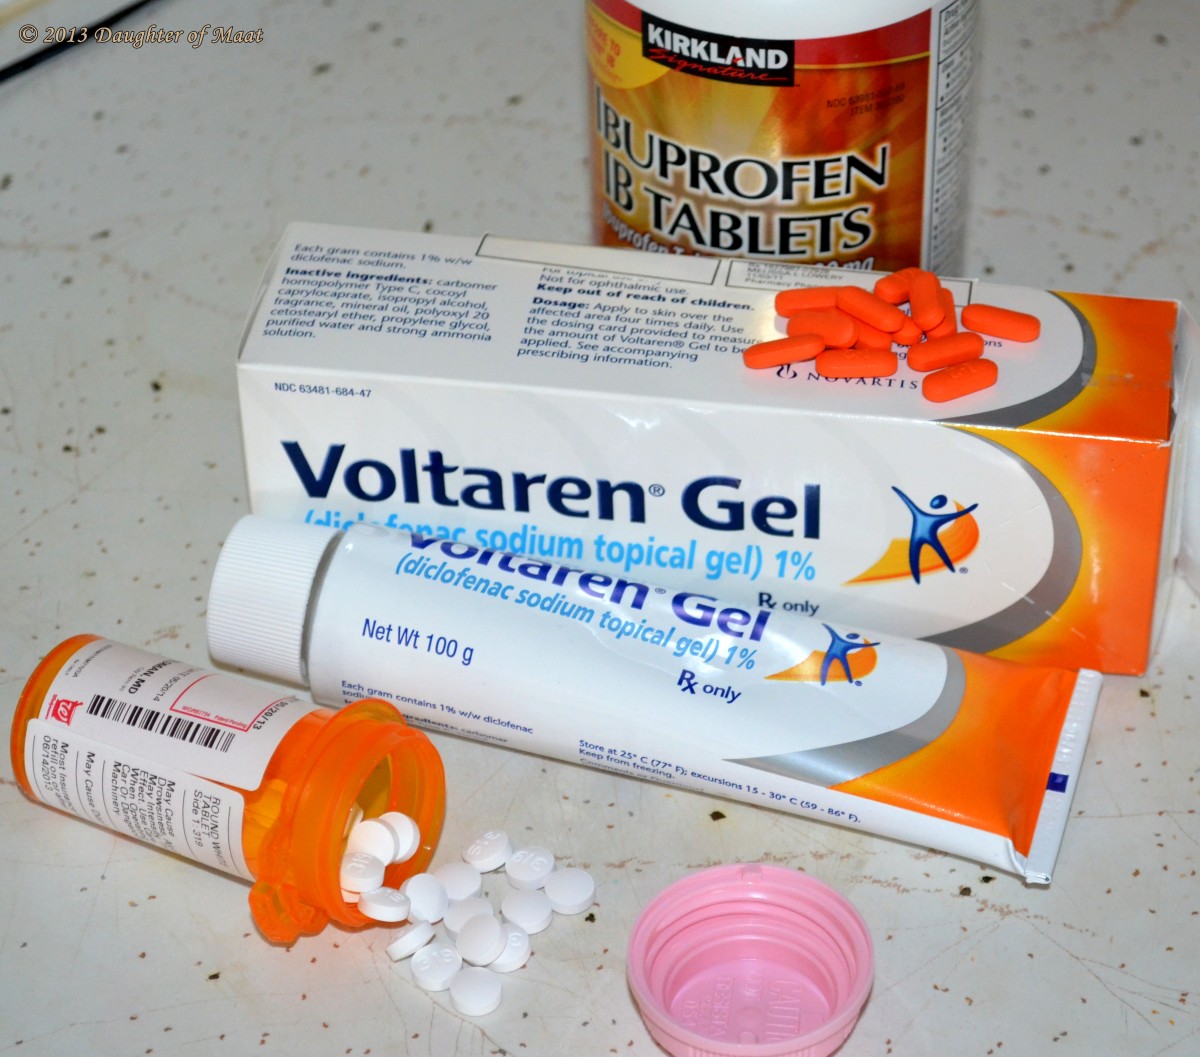 Voltaren Gel, Ibuprofen and tramadol pain medications. 